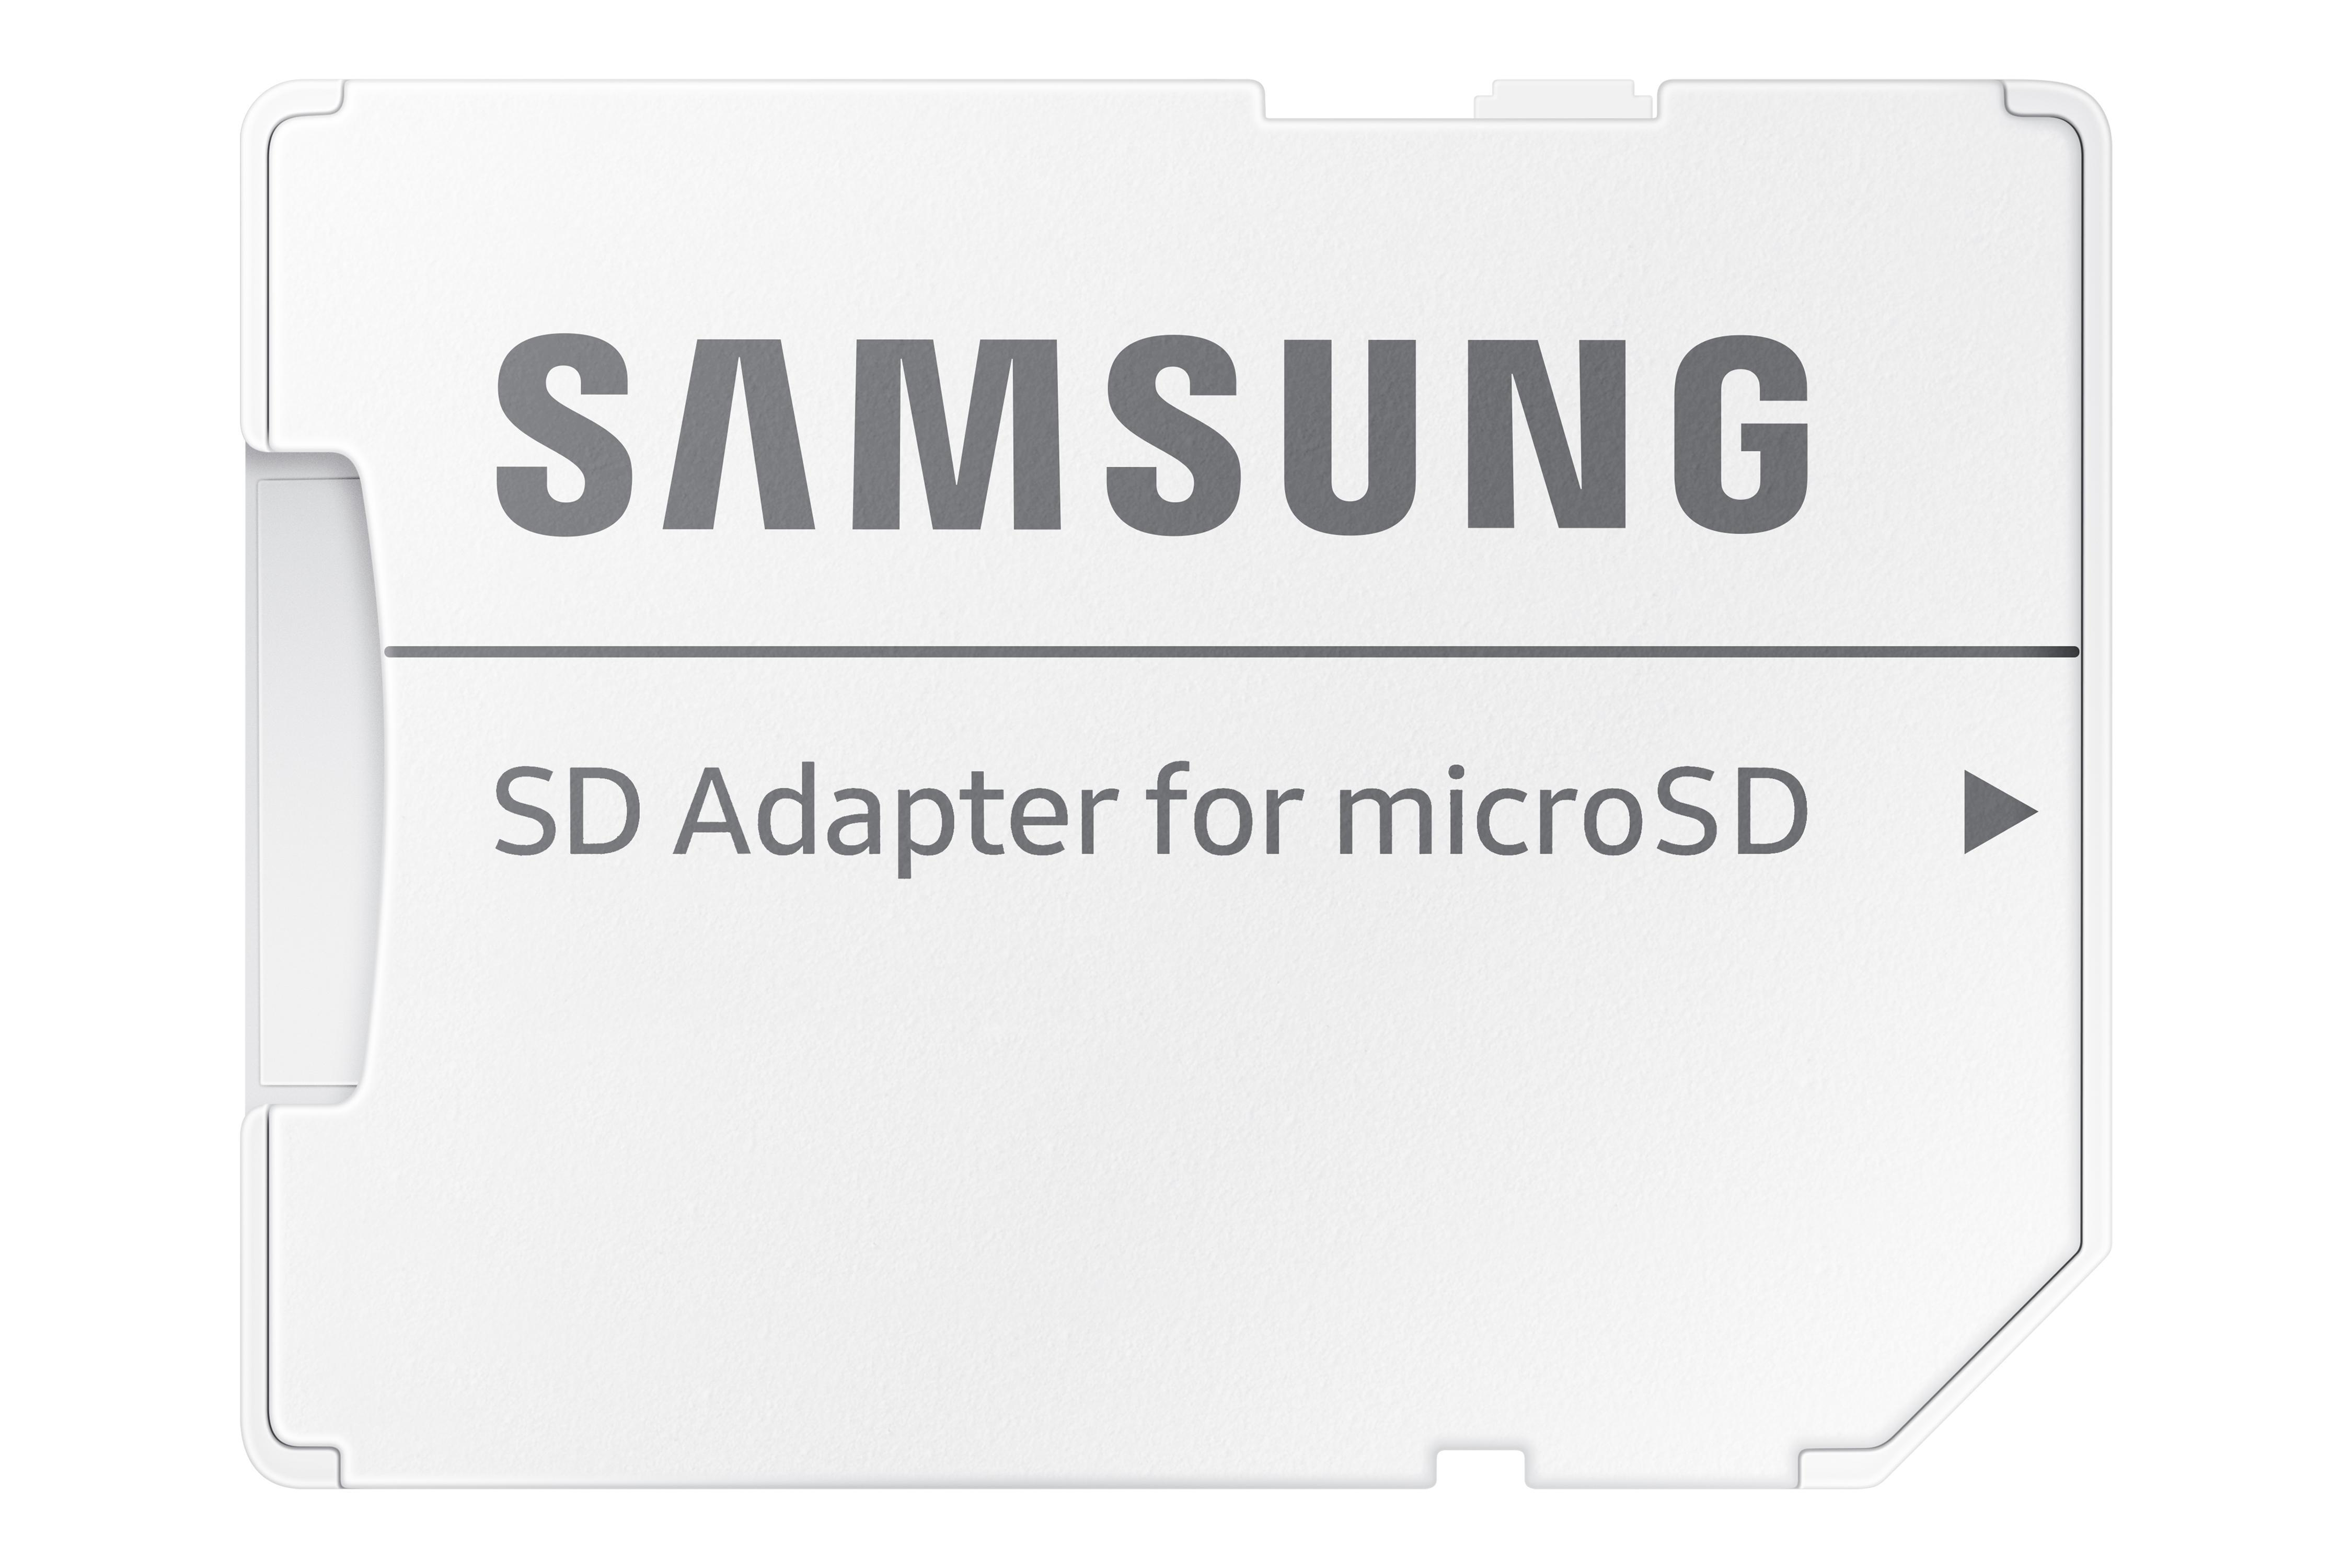 SAMSUNG PRO Endurance (2022), 256 Speicherkarte, GB, 100 Micro-SDXC MB/s